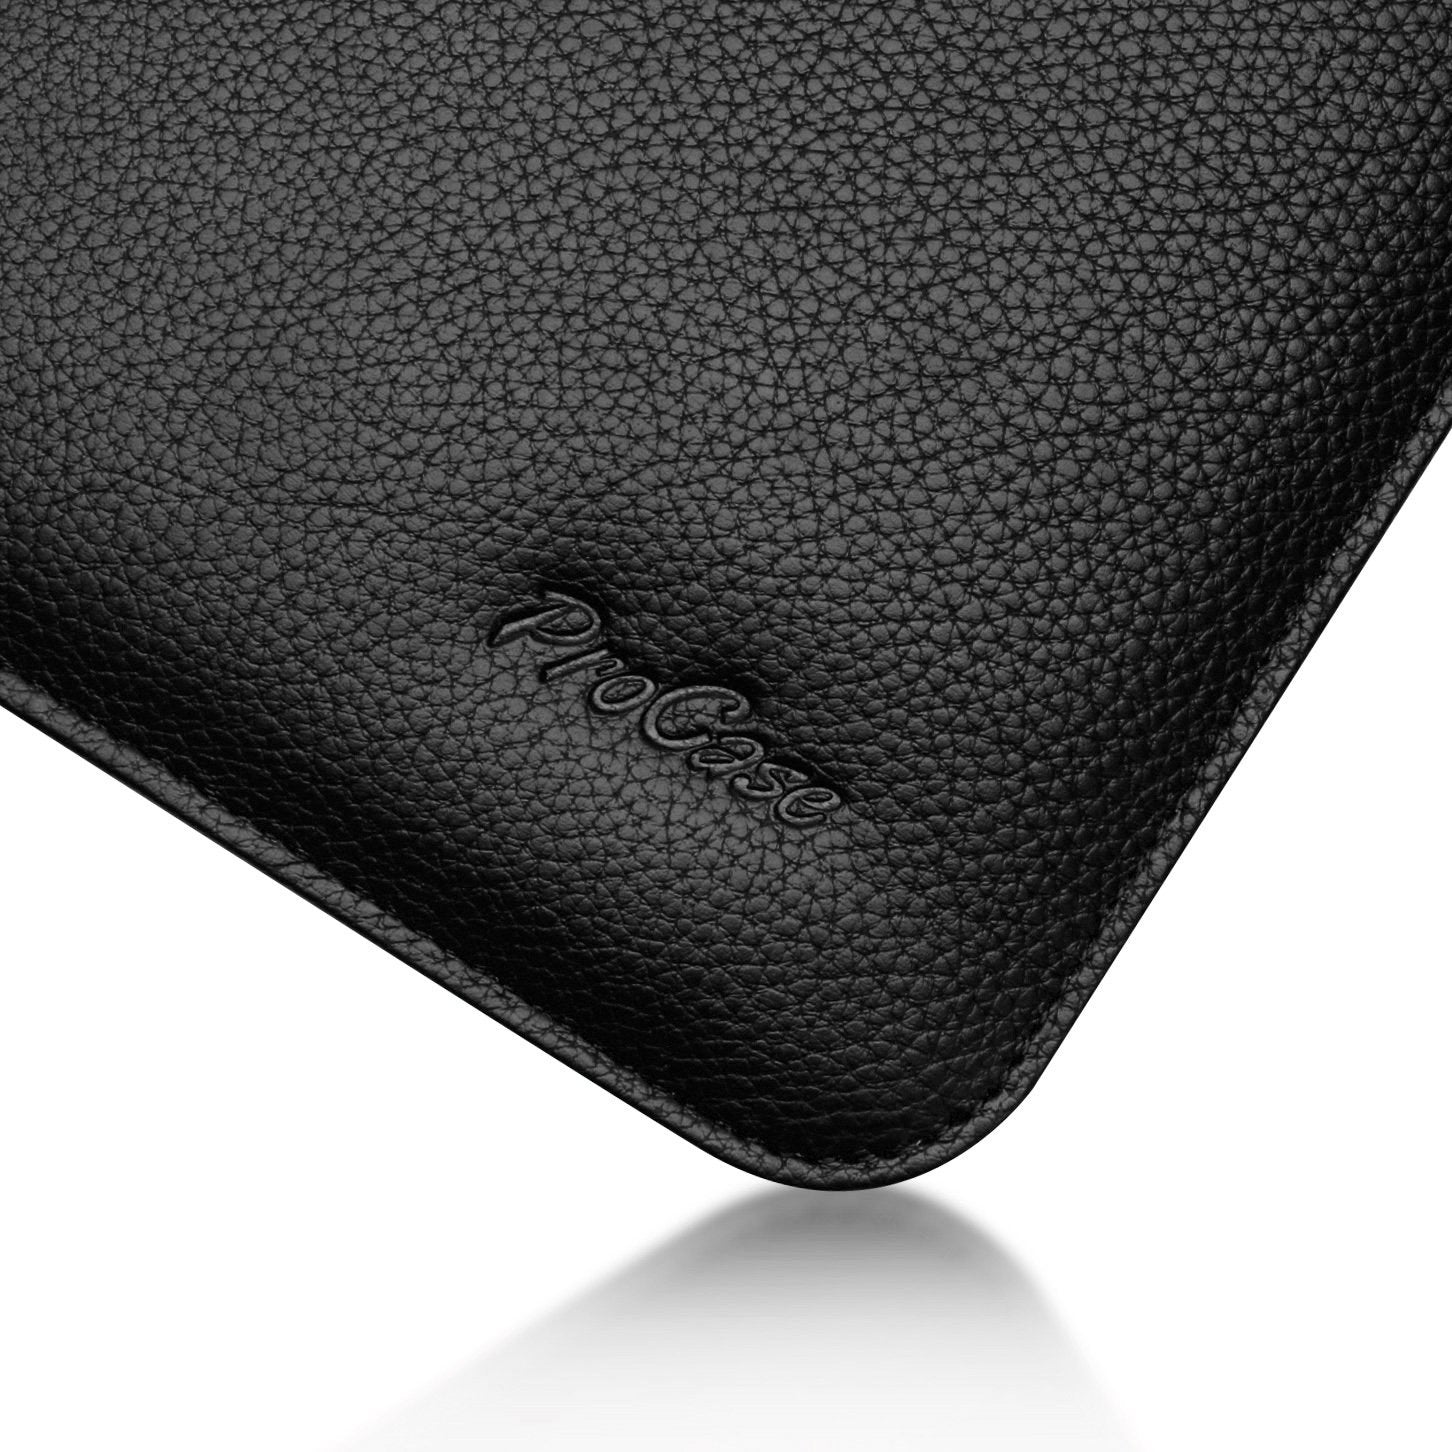 Leather-Look MacBook Sleeve Case - yrGear Australia